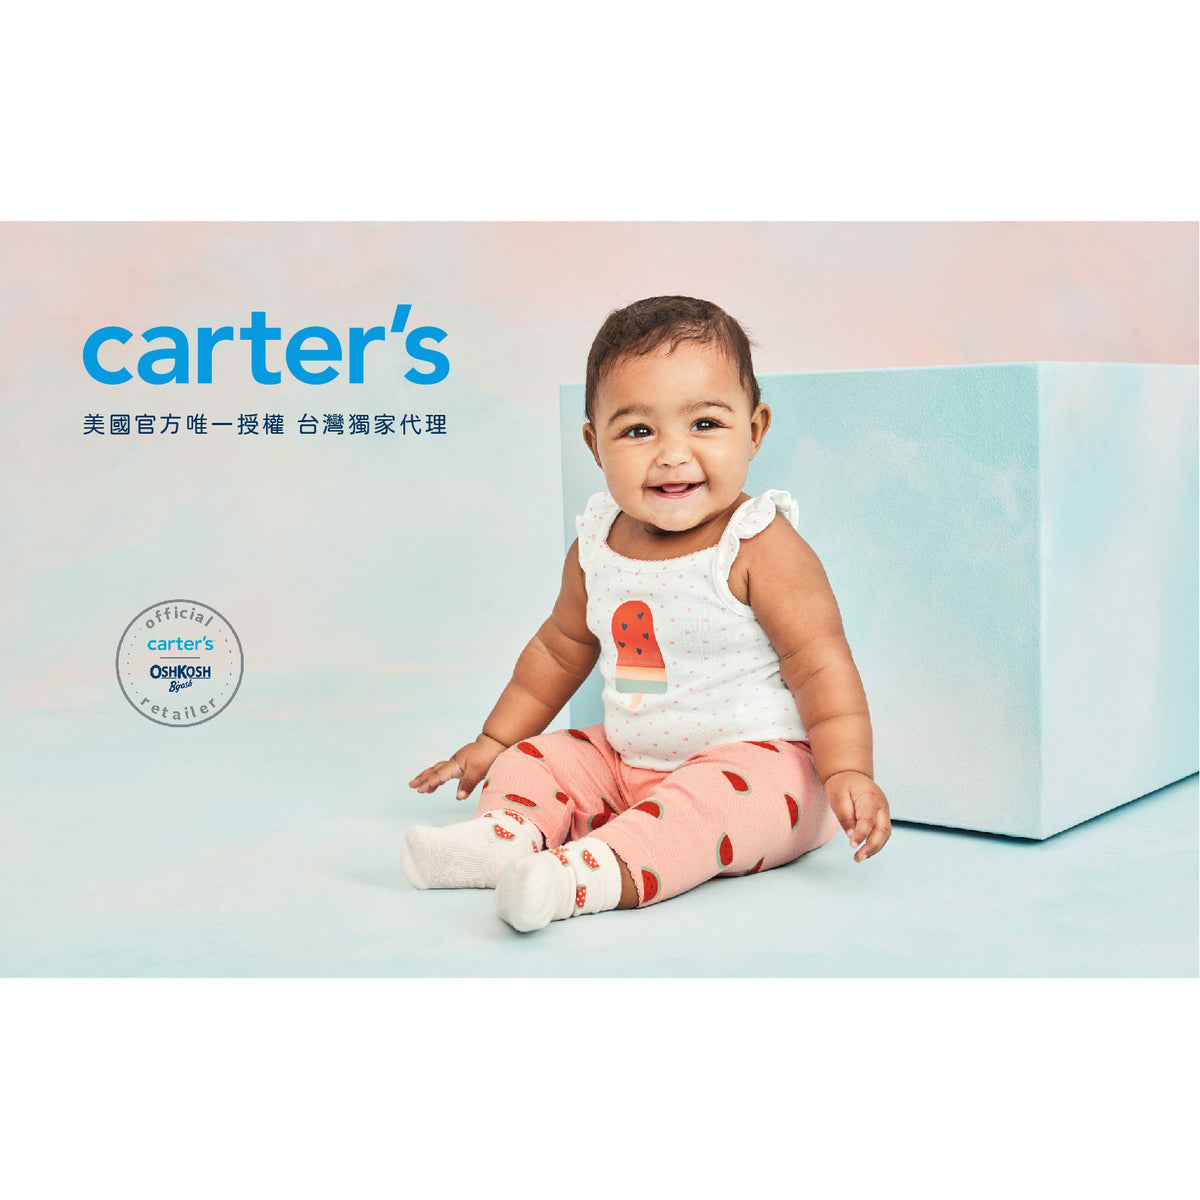 Carter's 藍白條紋2件組套裝(6M-24M)